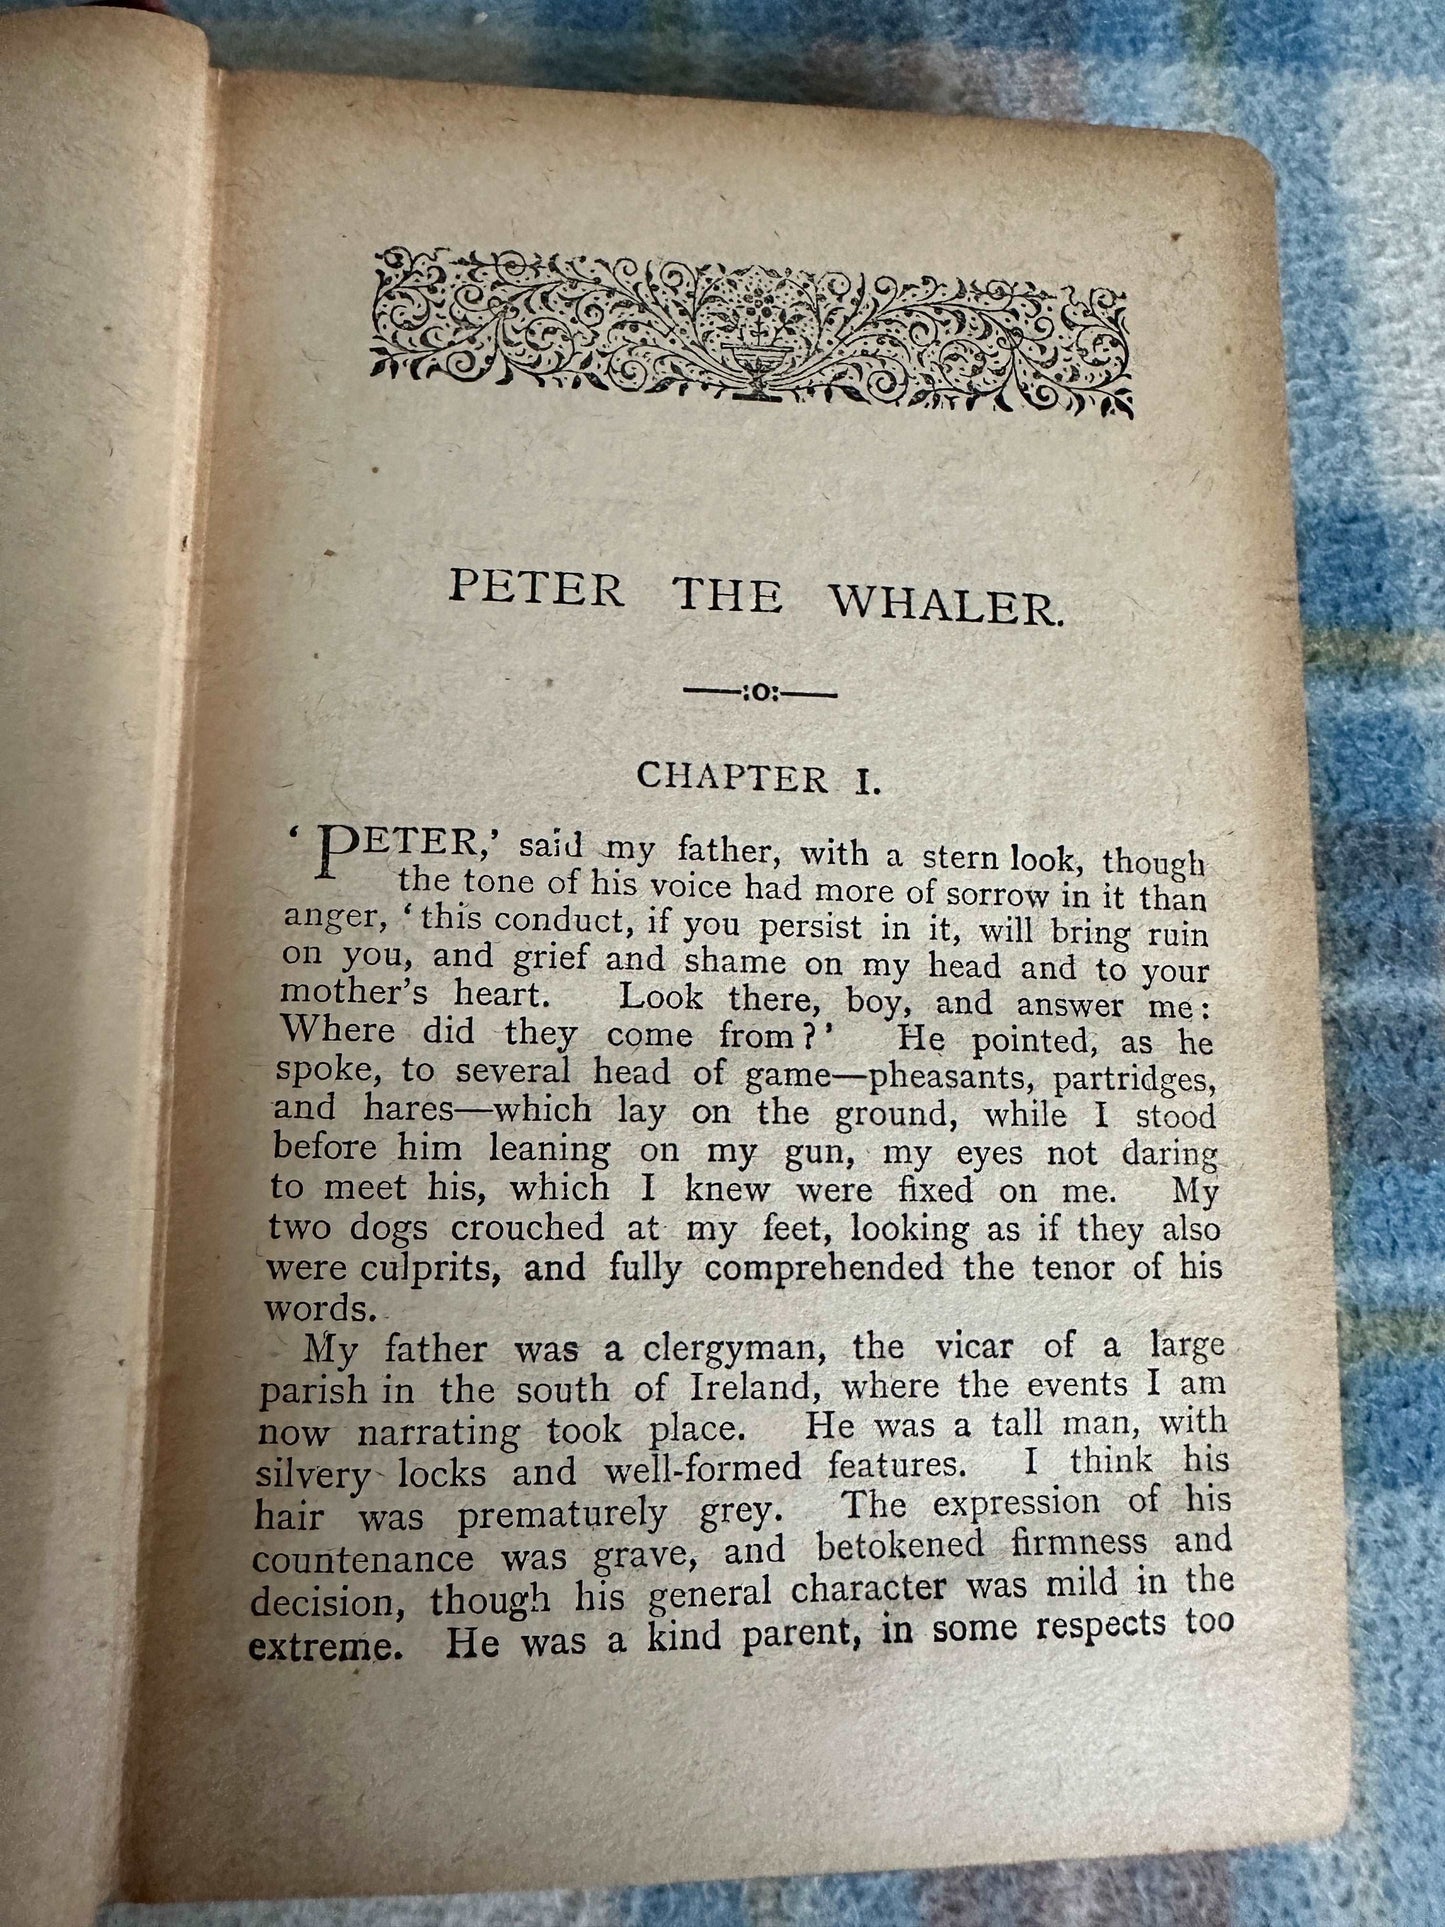 1896? Peter The Whaler - William Henry Giles Kingston(Richard Edward King Published)